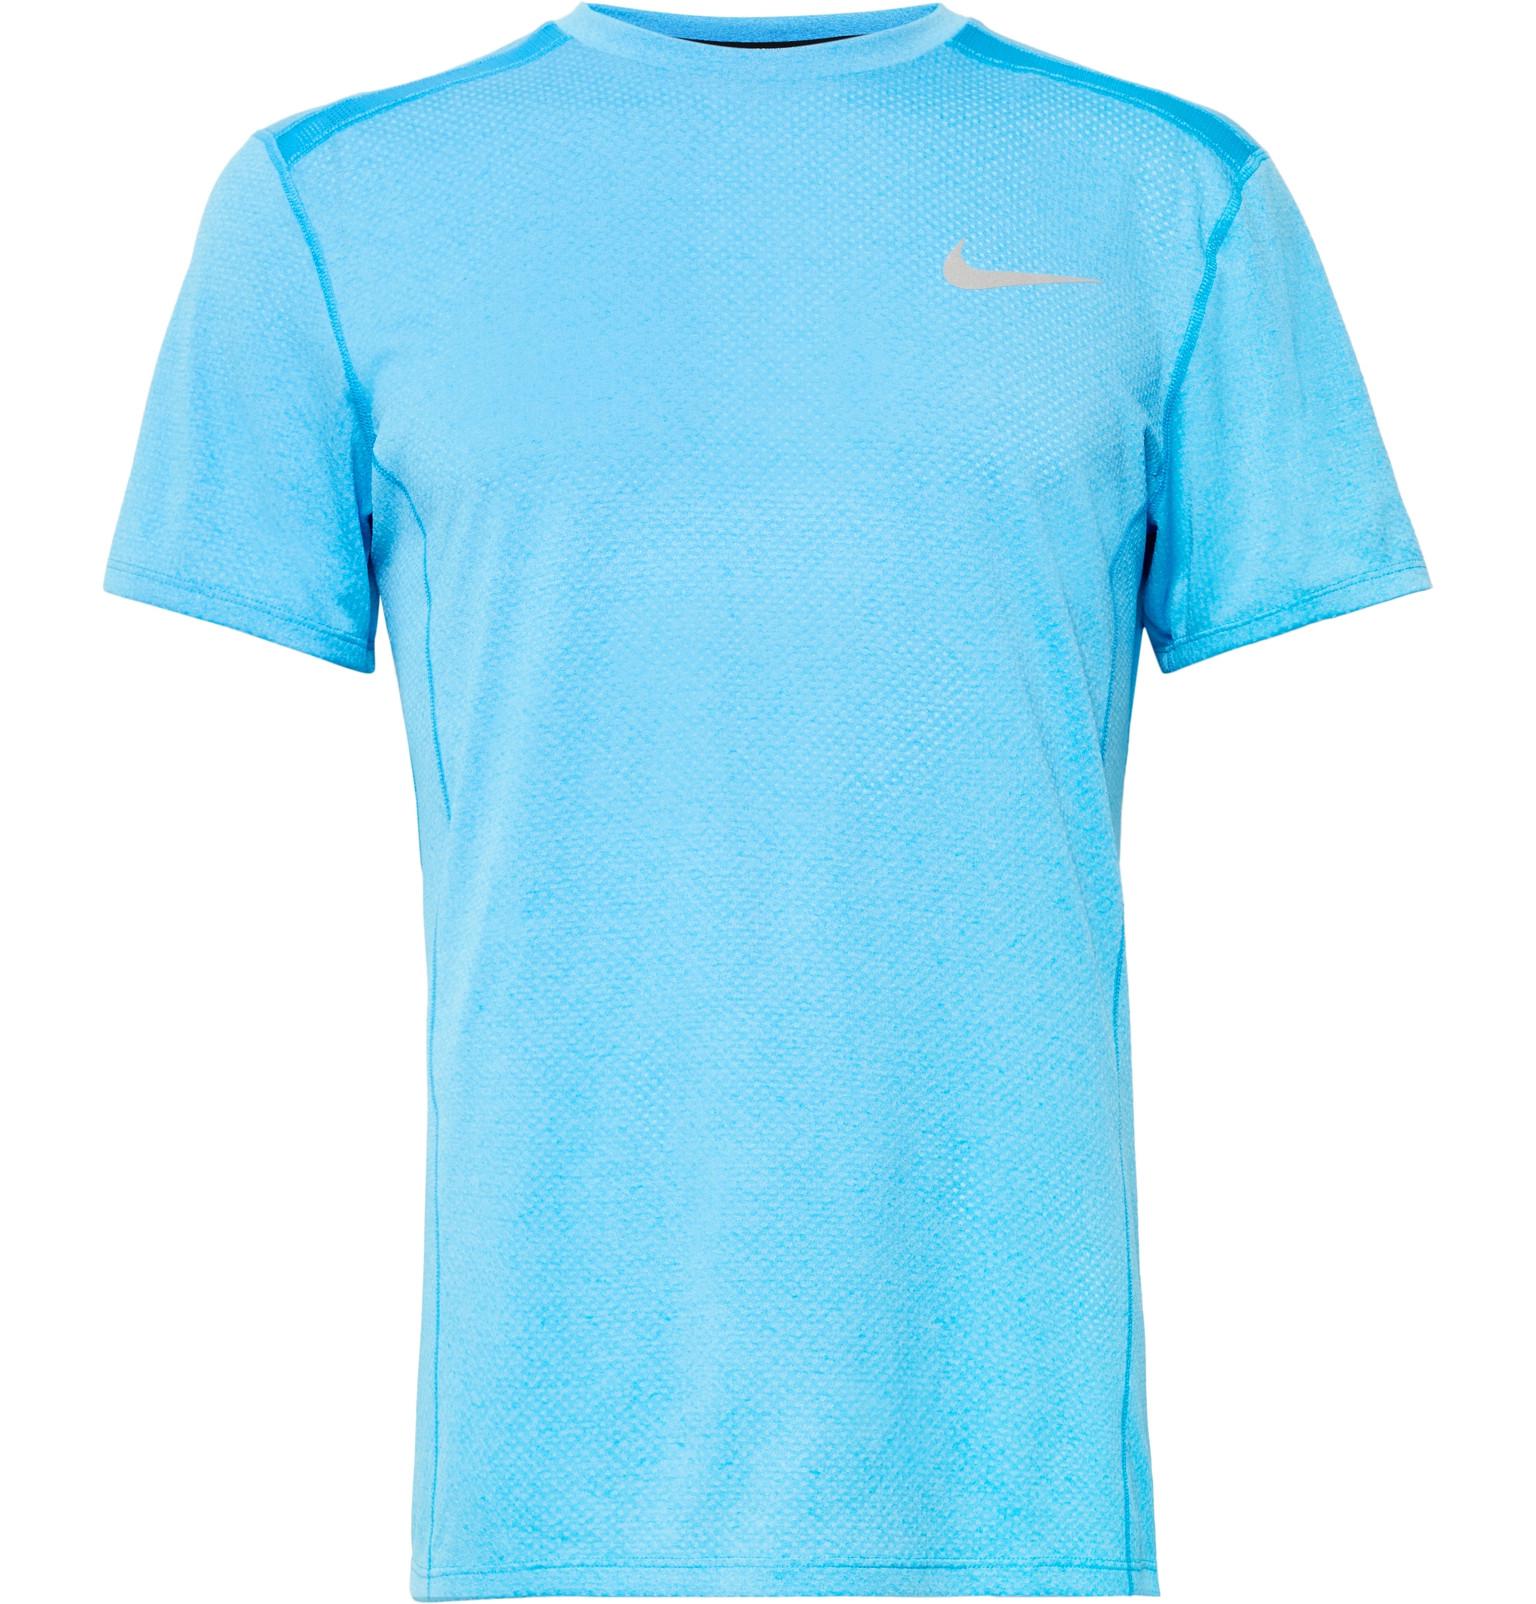 Nike Miler Dri-fit Mesh T-shirt in Azure (Blue) for Men - Lyst